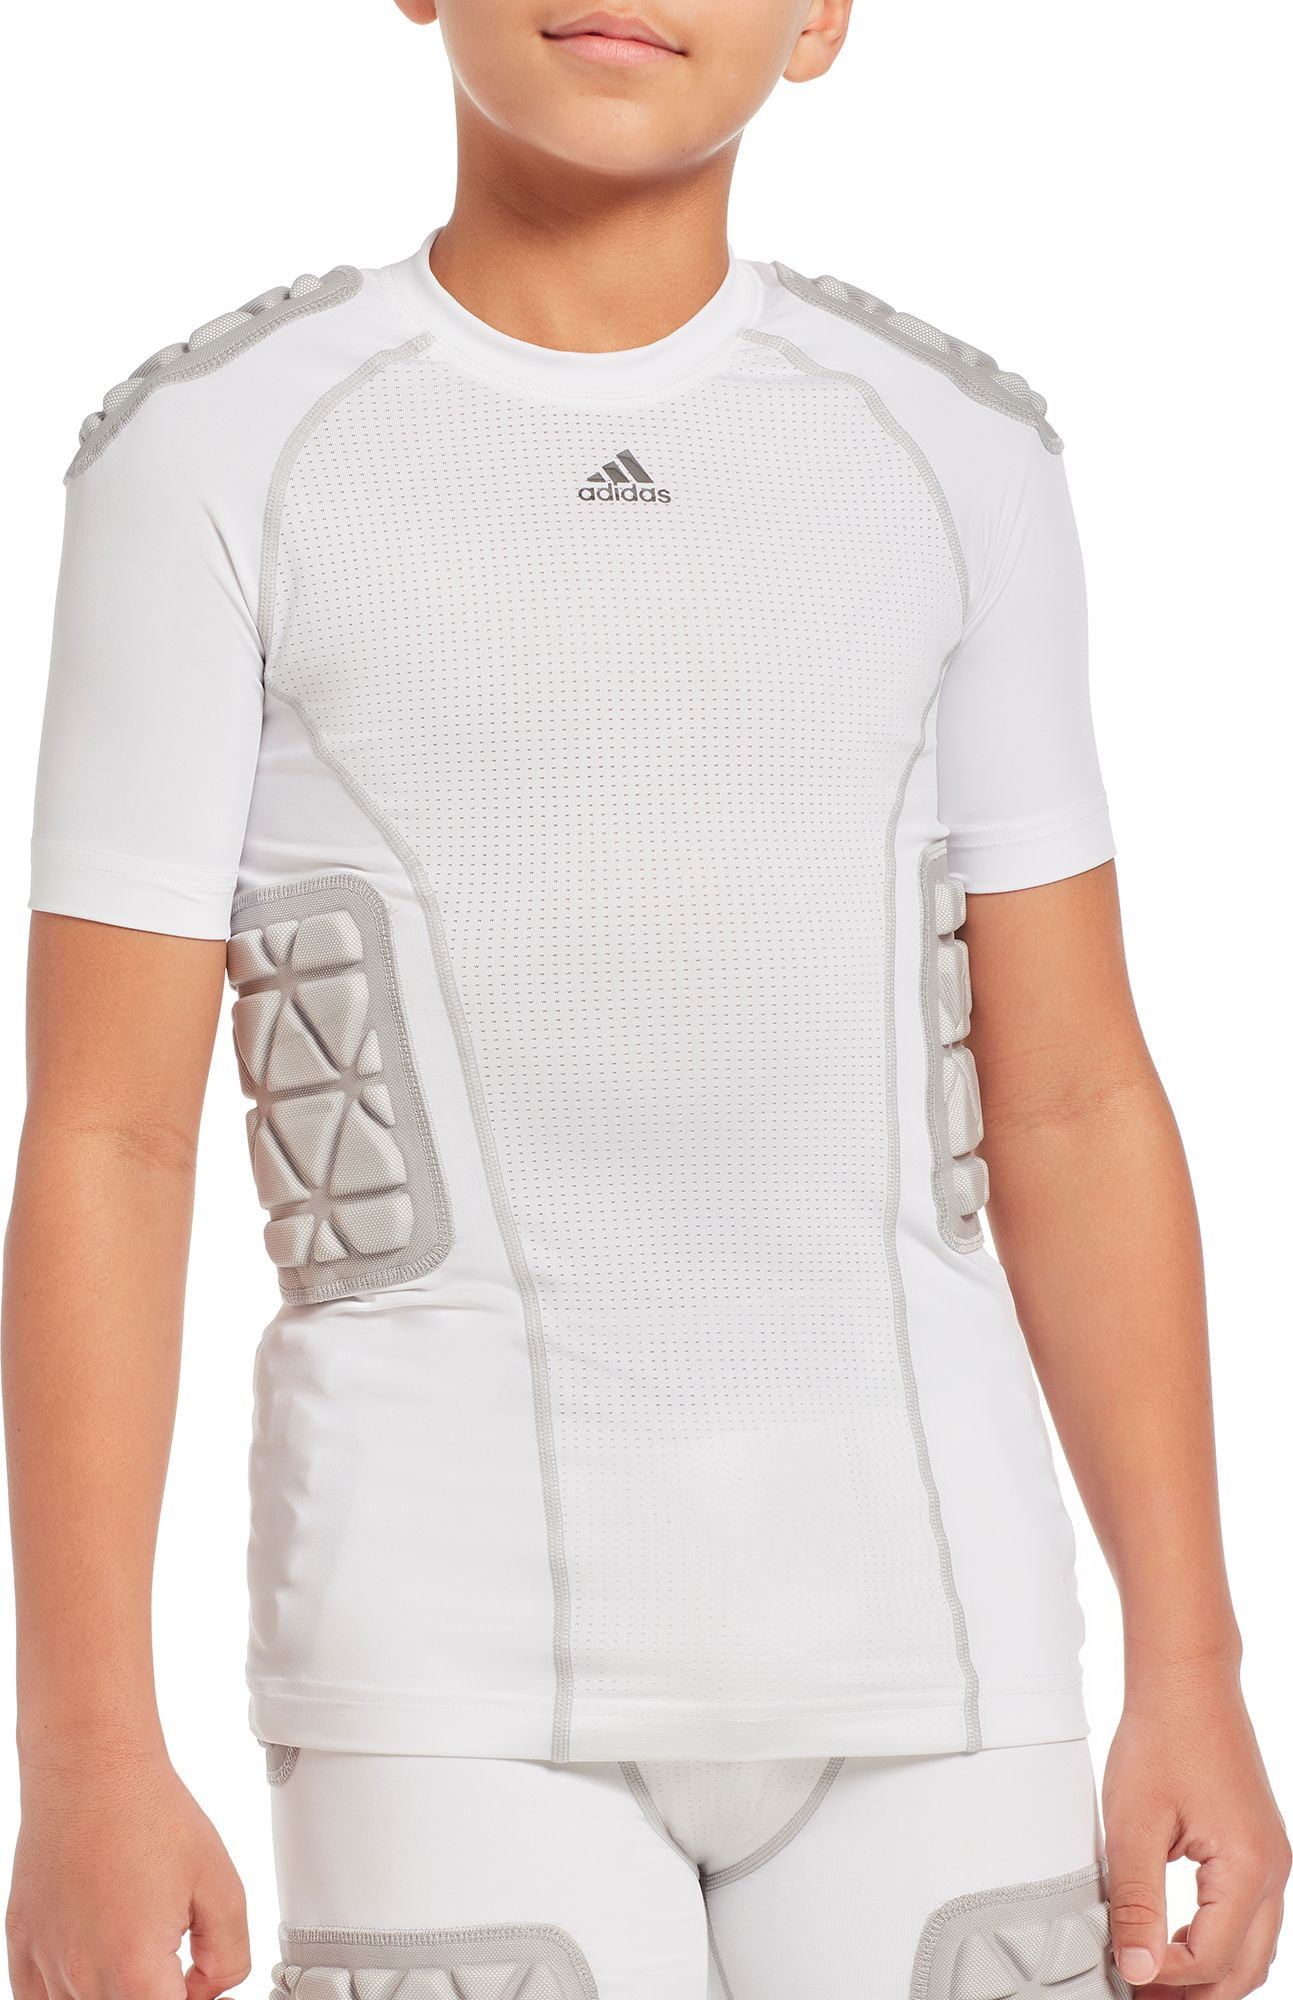 adidas football compression shirt